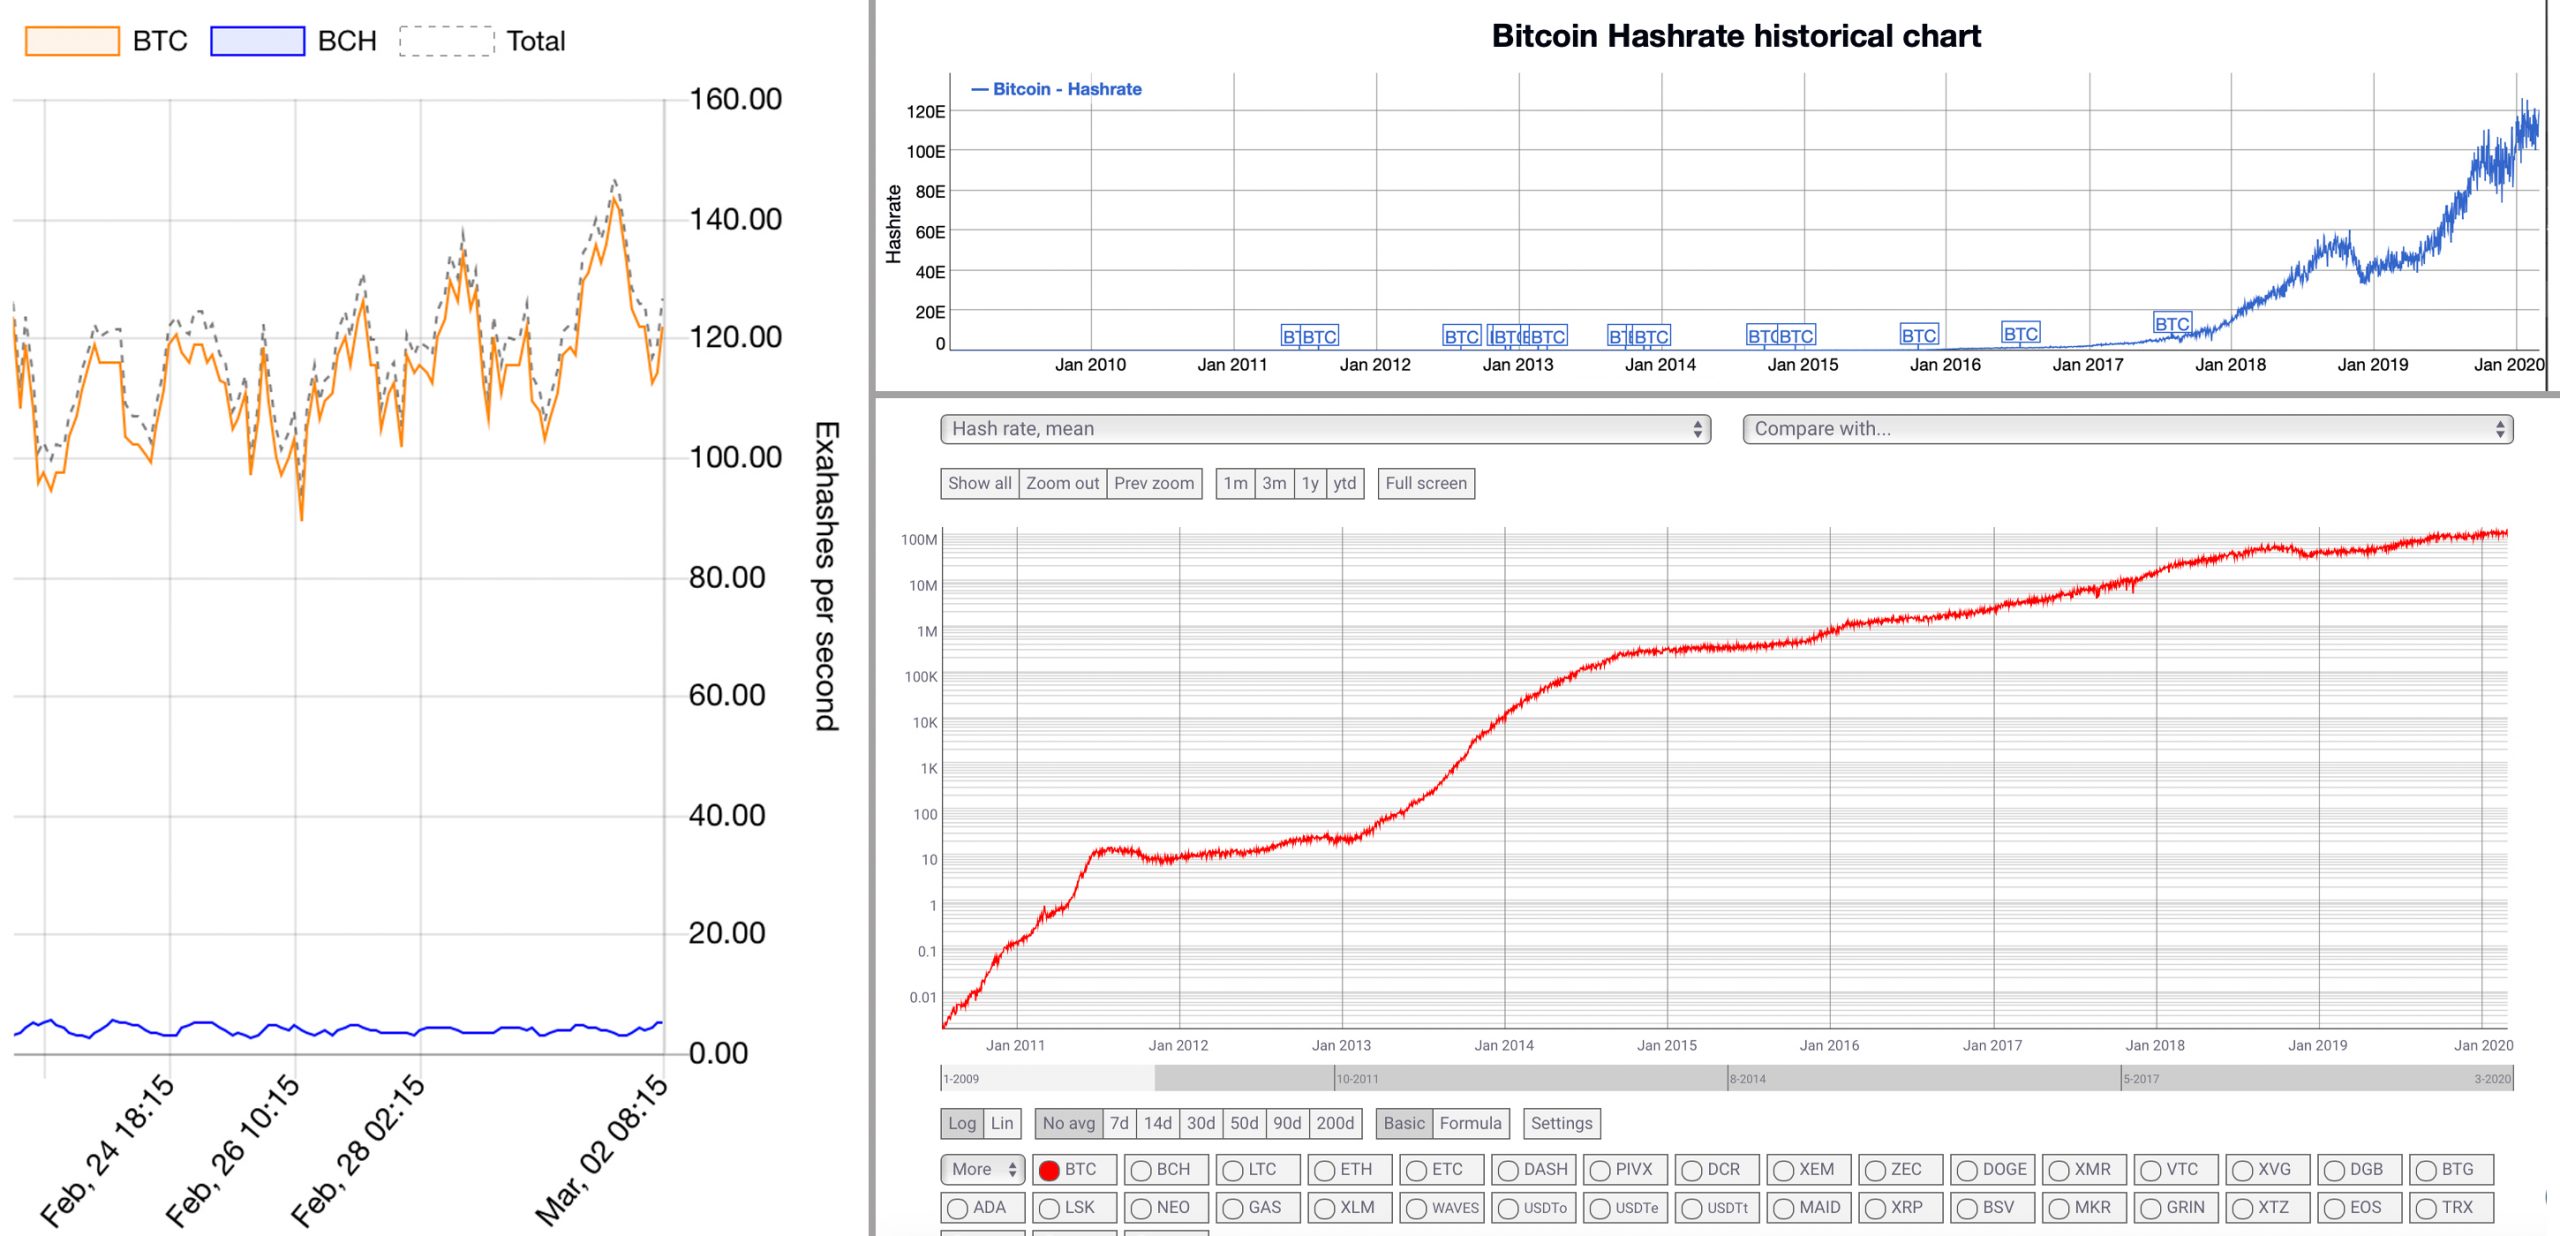 Bitcoin Mining Investment Strong - BTC Hashrate överträffar all-time high